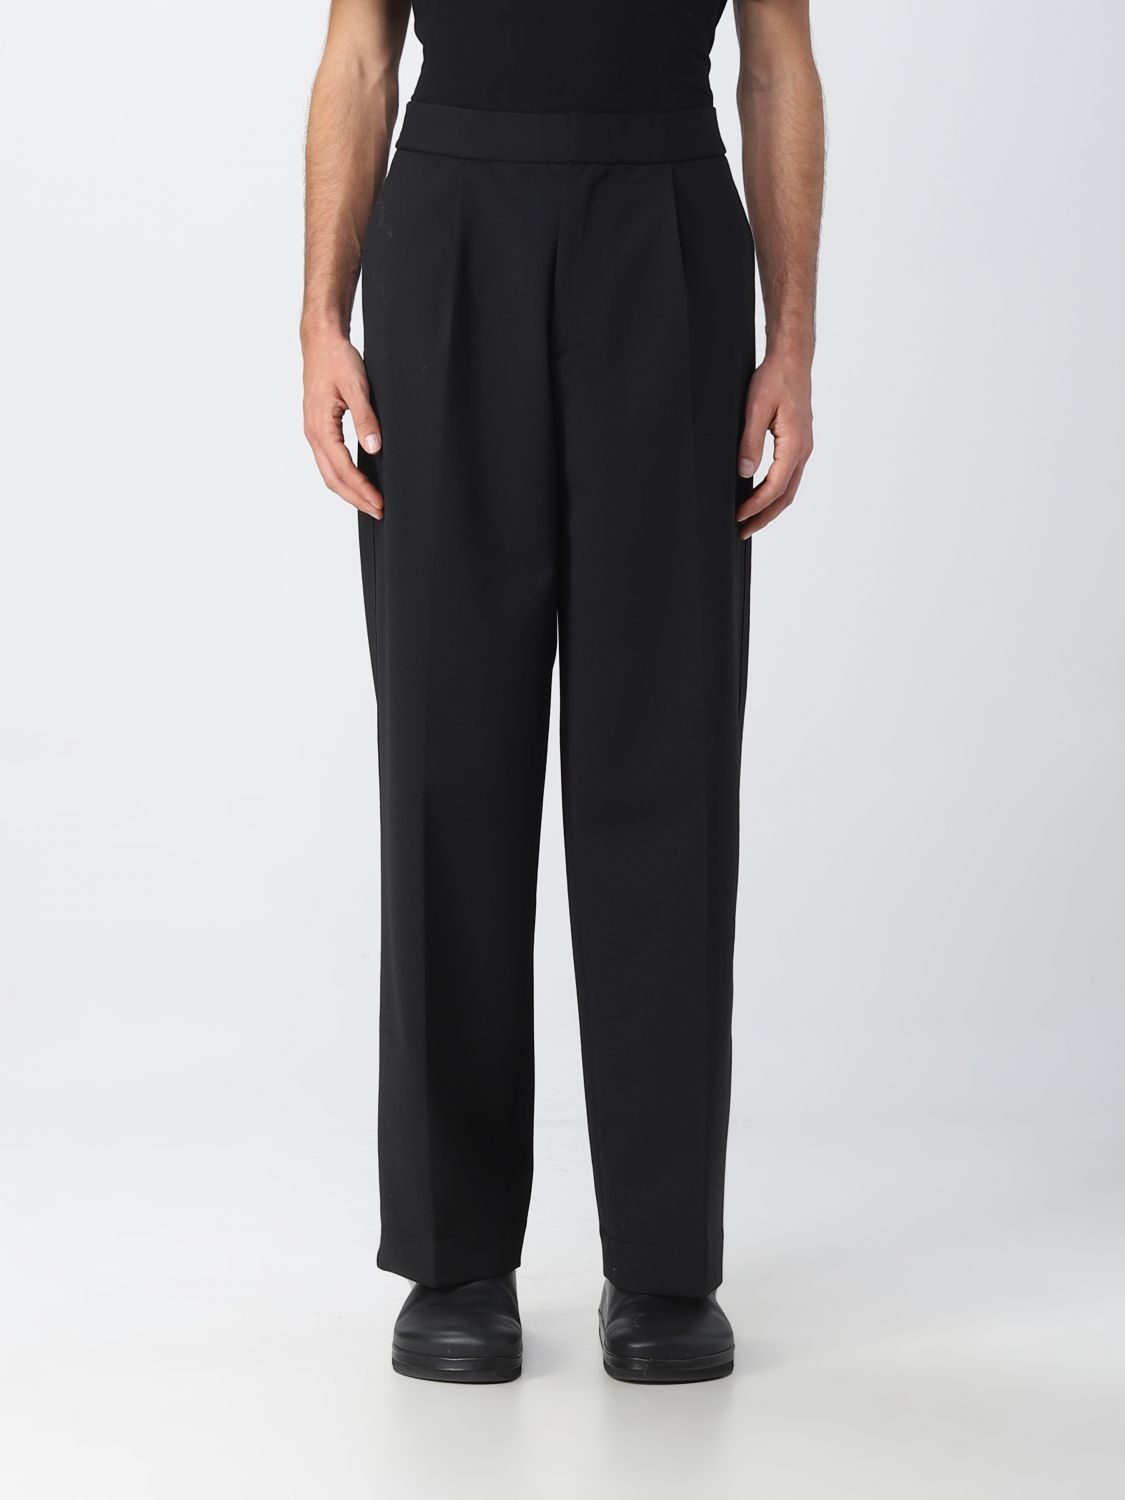 BONSAI: pants for man - Black | Bonsai pants PT005V1 online on GIGLIO.COM